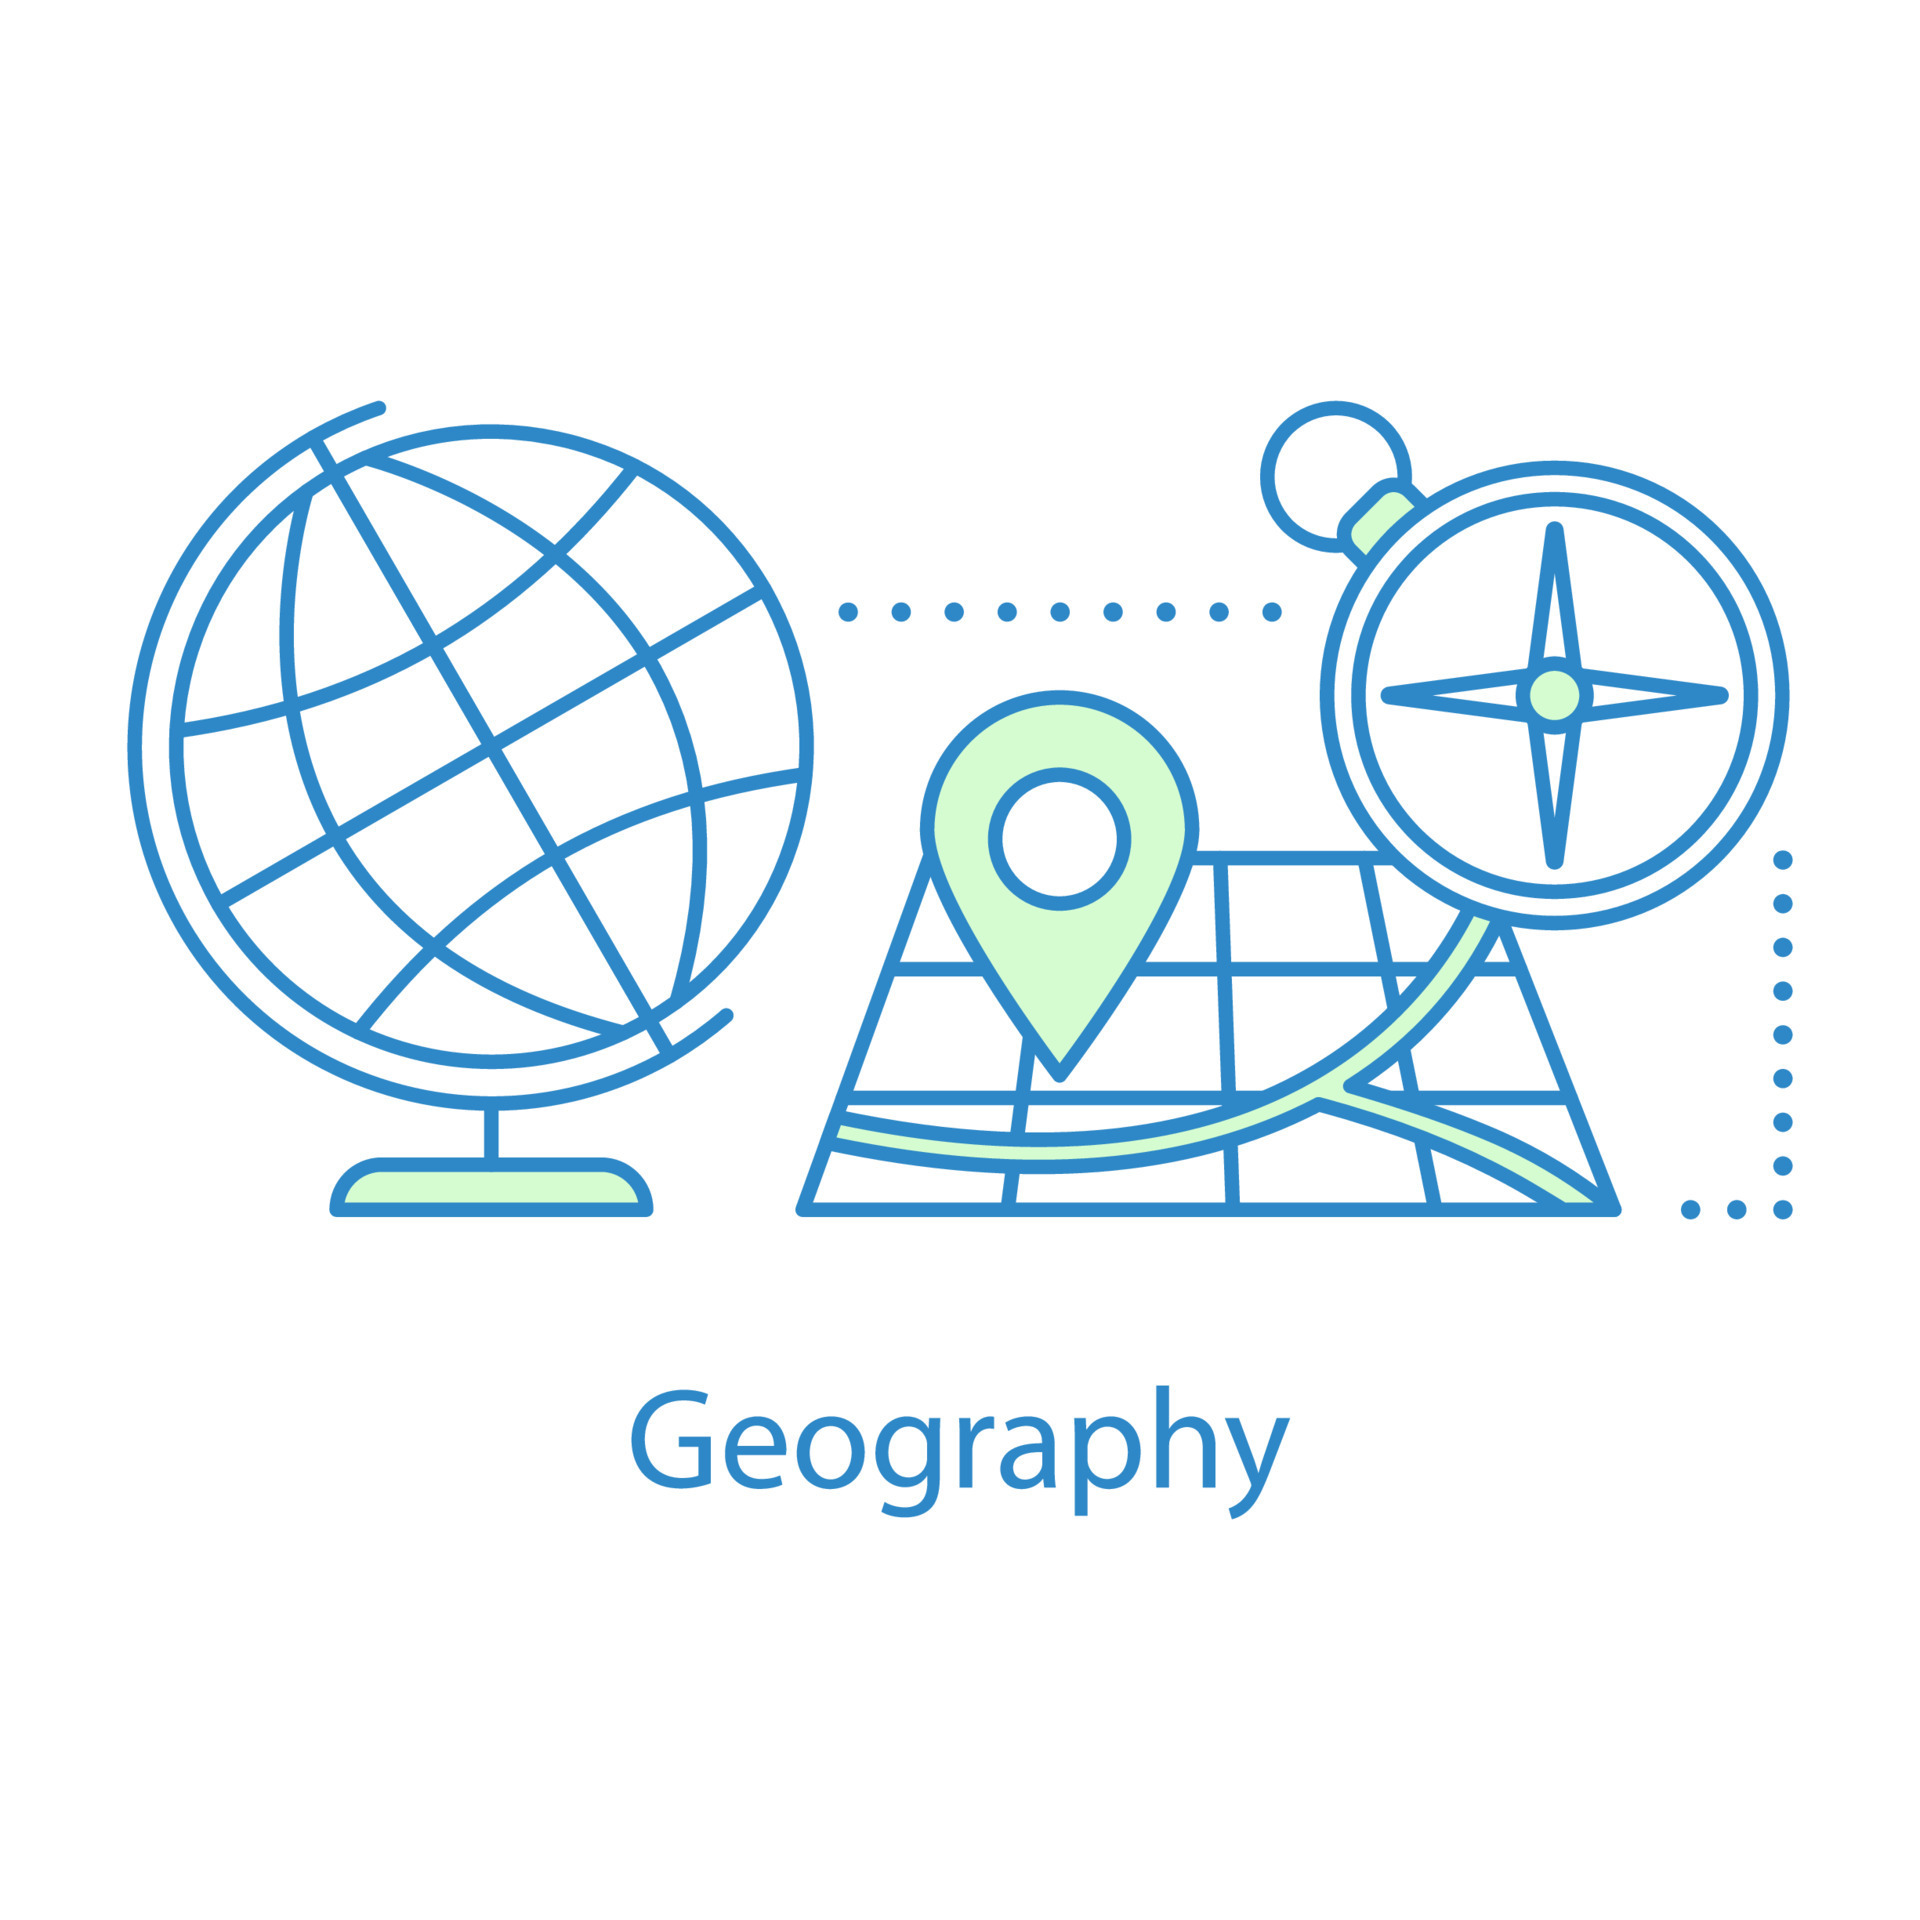 Cartografia - Geografia